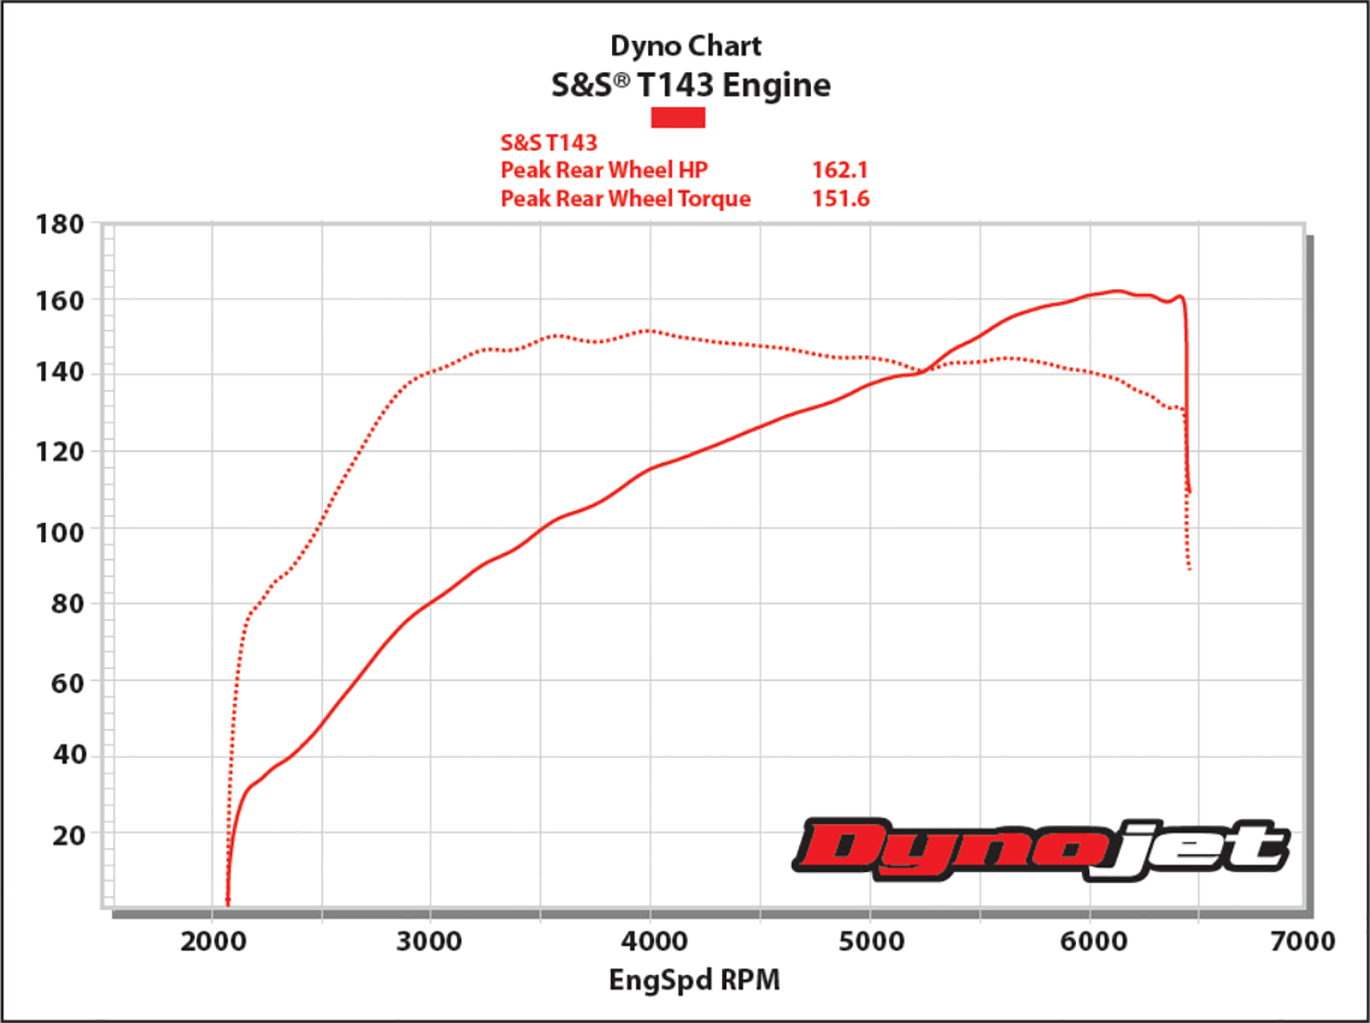 Harley Davidson Engine Size Chart